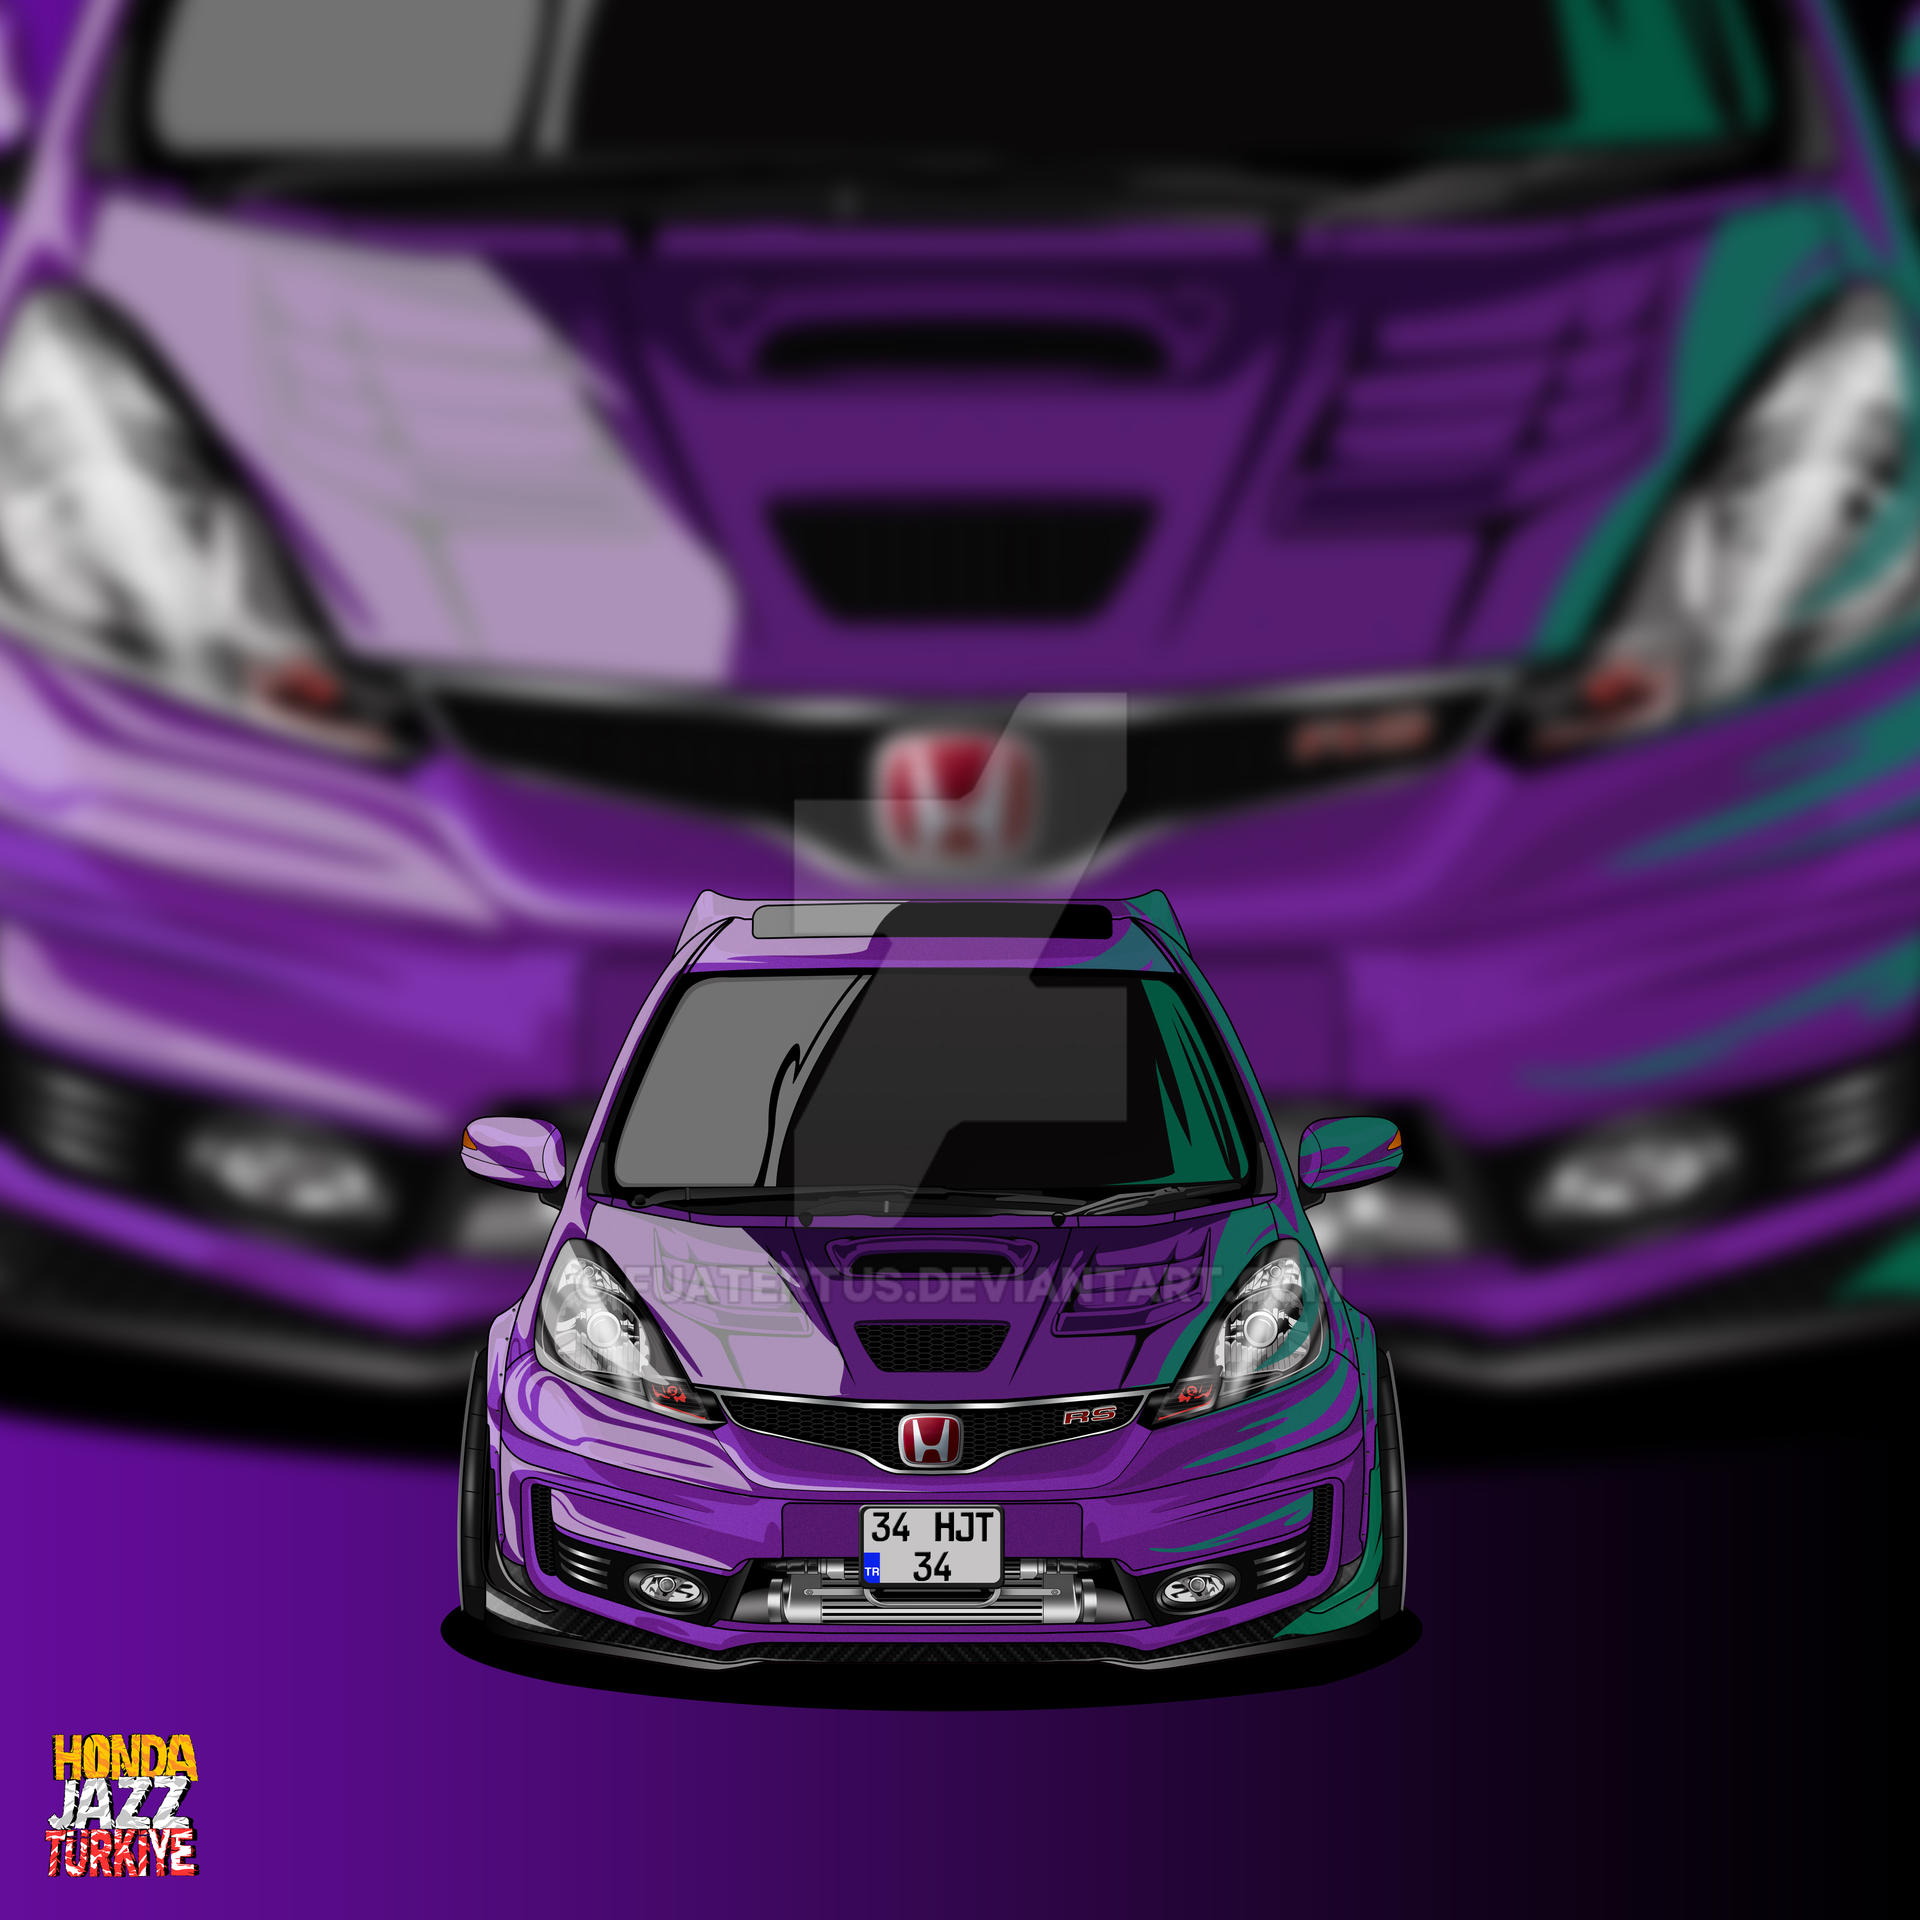 Honda Jazz Fit Ge8 Violet Graphic Design By Fuatertus On Deviantart